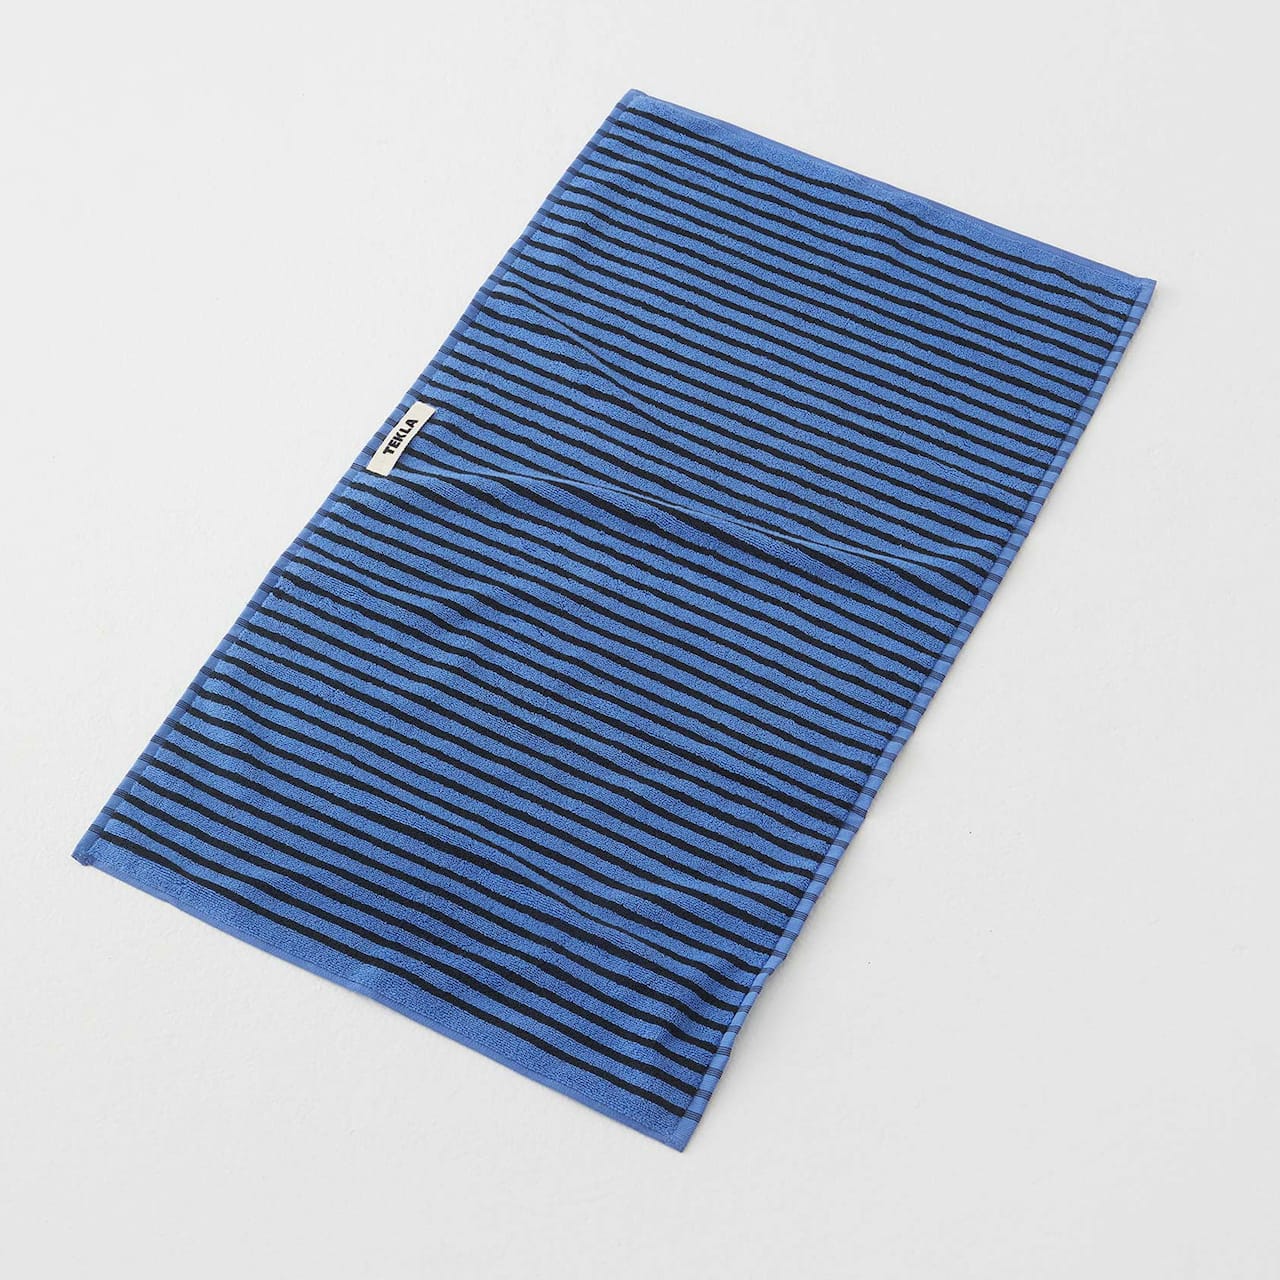 Terry Towel Striped Blue & Black